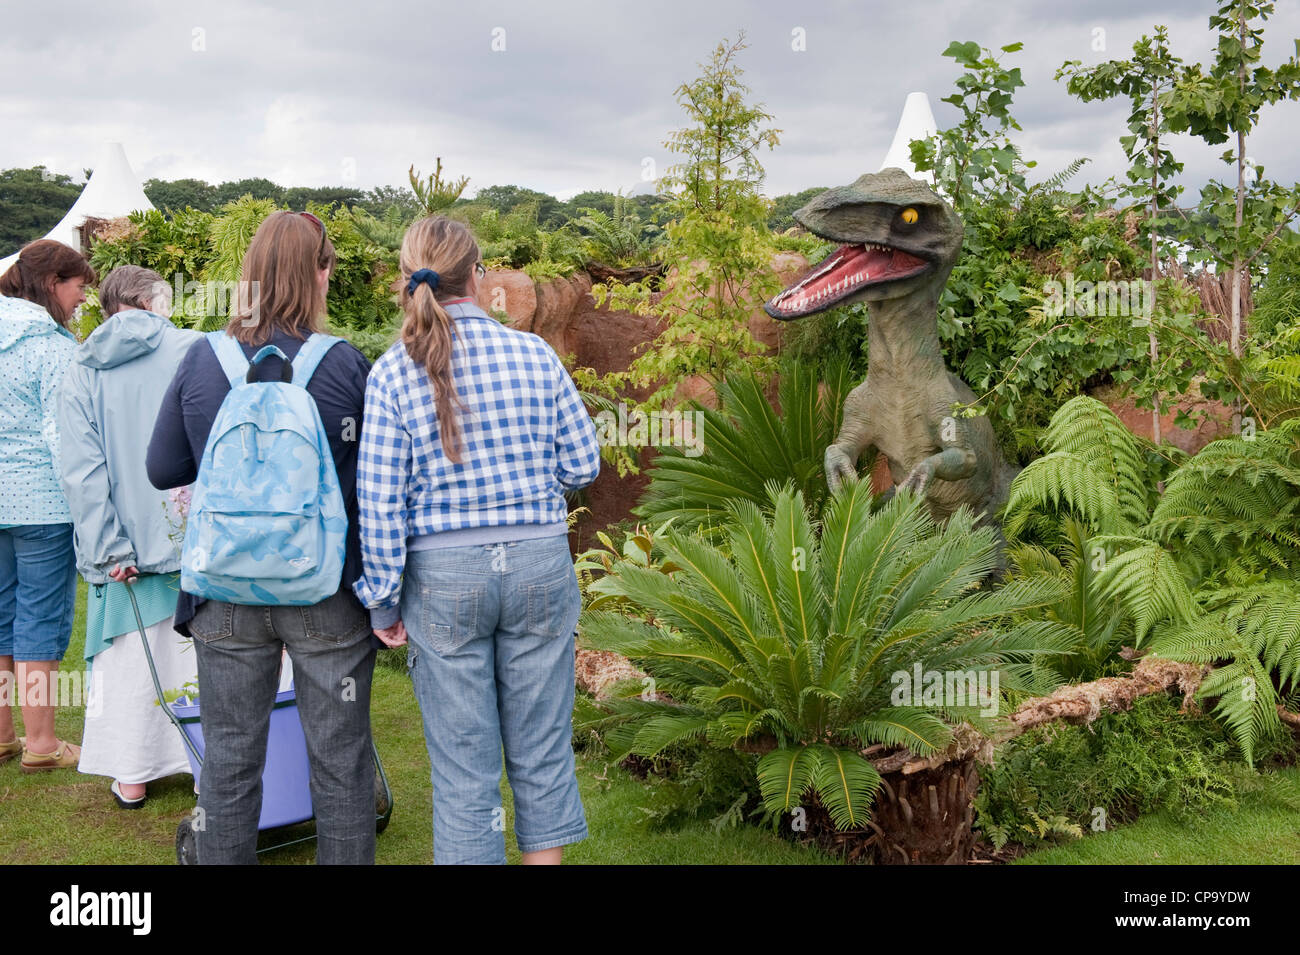 People view fierce raptor, green ferns & palms in prize-winning show garden (Dinosaurs at Large exhibit) - RHS Flower Show, Tatton Park, Cheshire, UK. Stock Photo